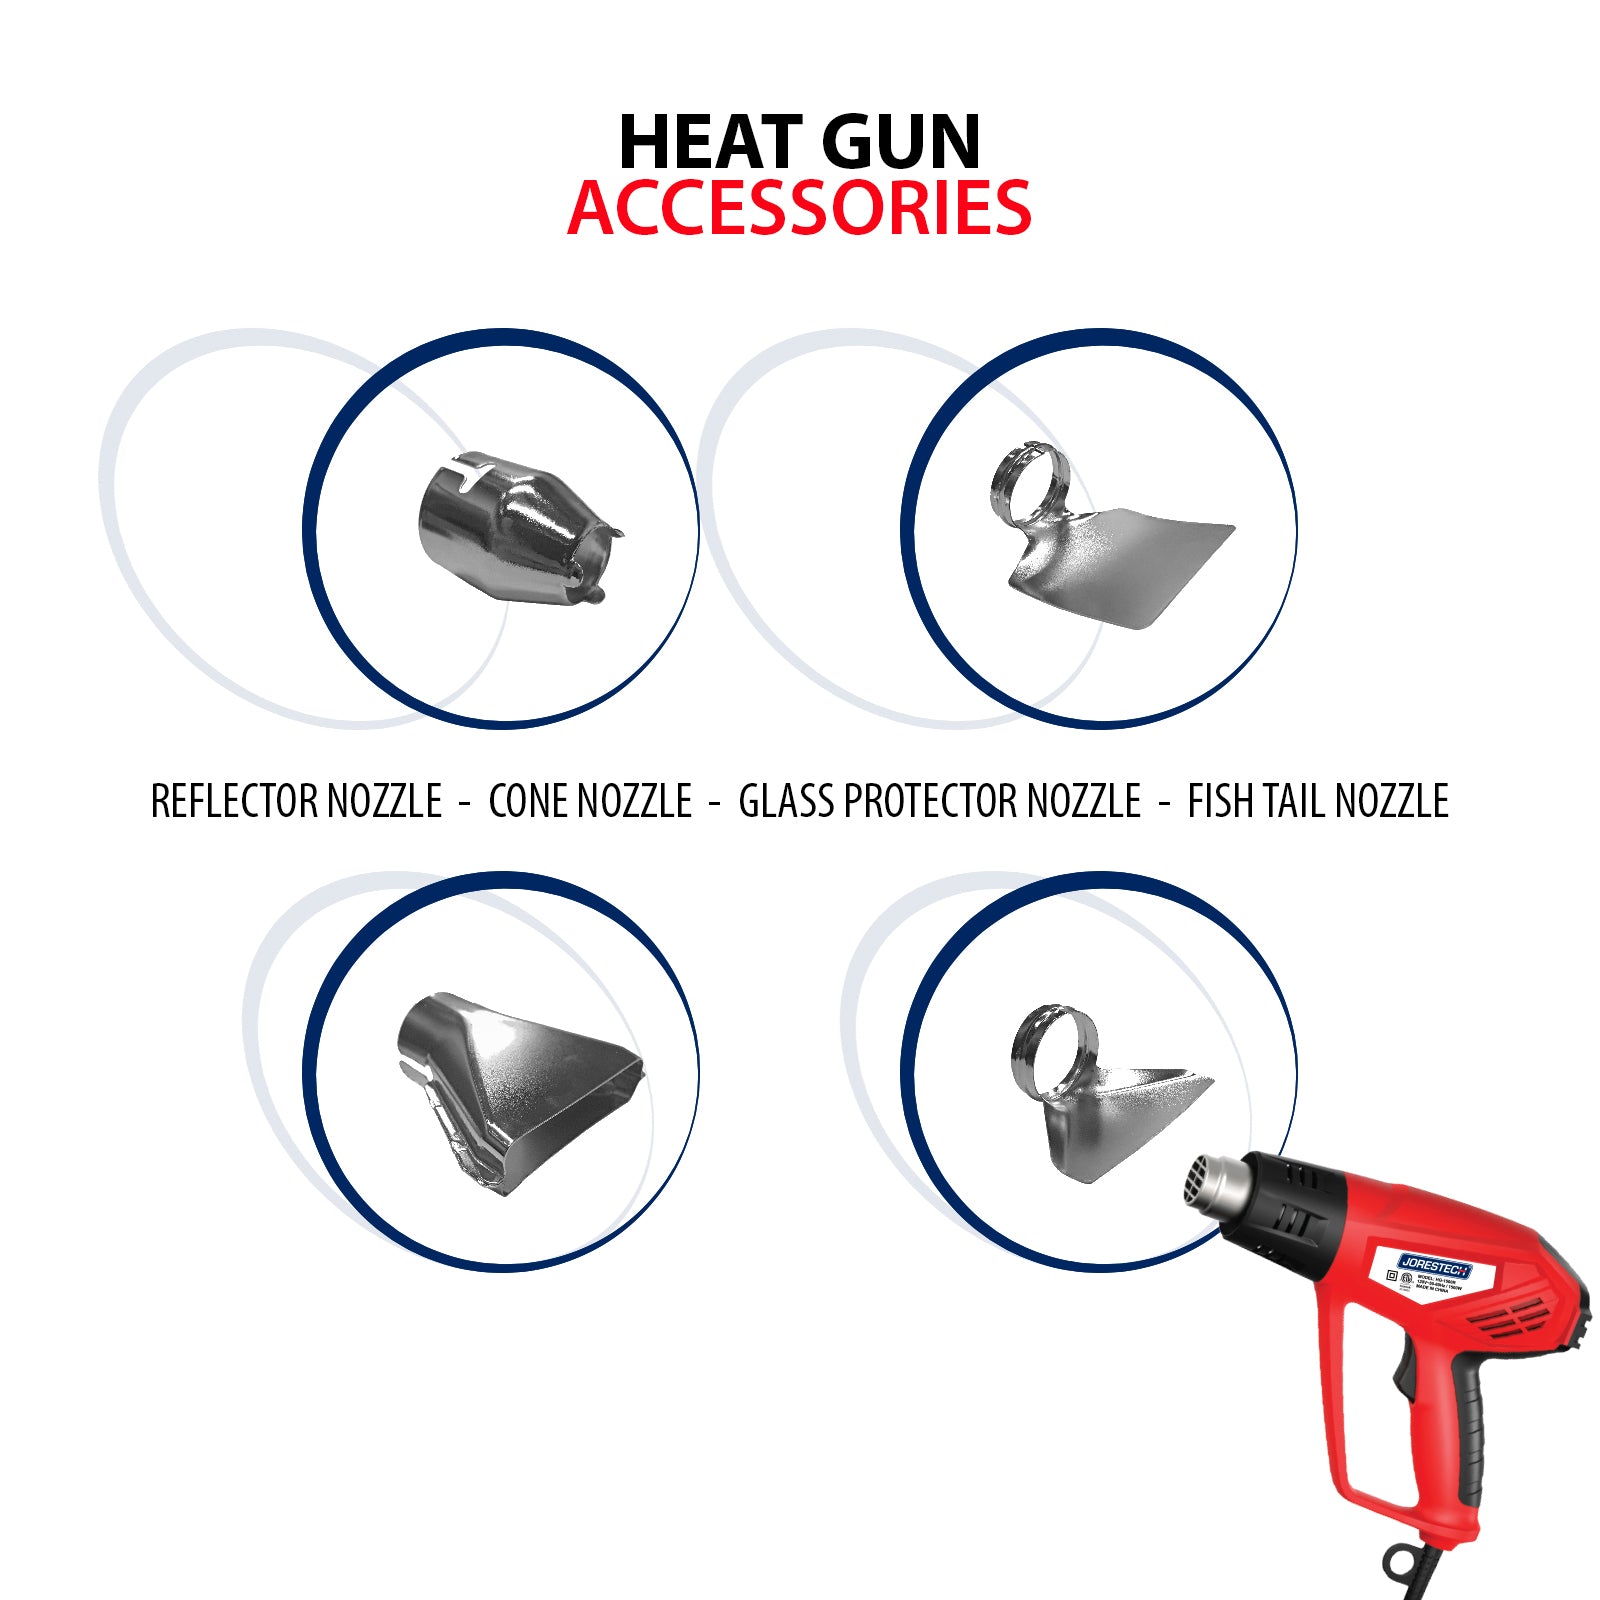 Industrial Heat Guns Help Work Easily on Shrink Wrap Hg5520